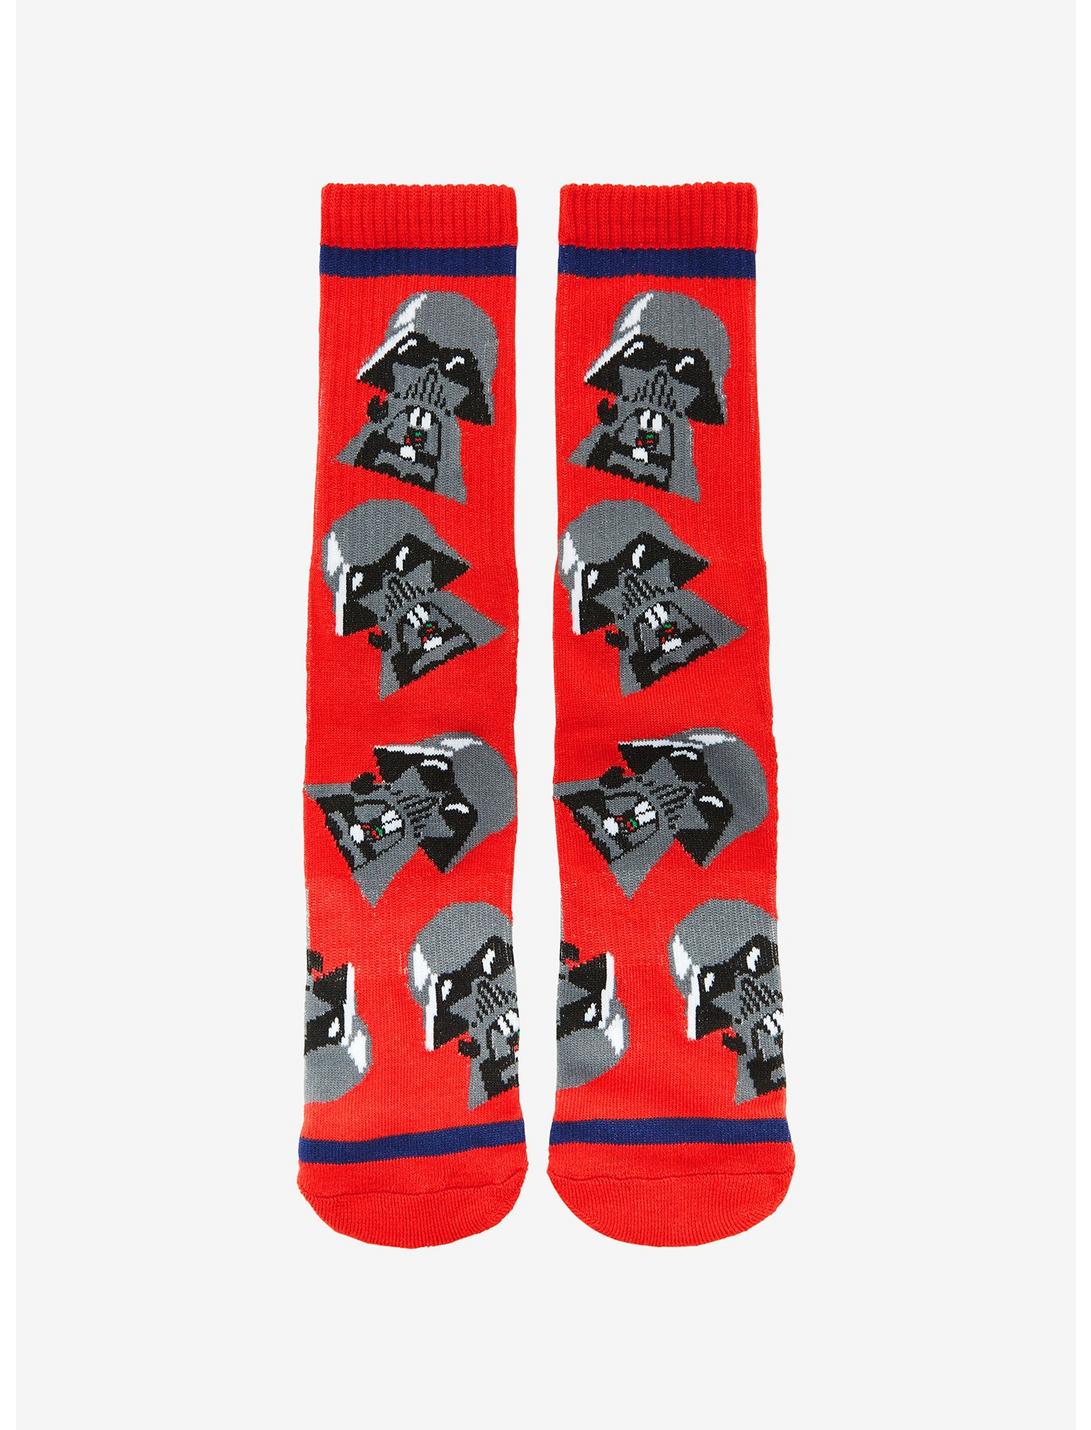 Star Wars Darth Vader Chibi Allover Print Crew Socks - BoxLunch Exclusive, , hi-res